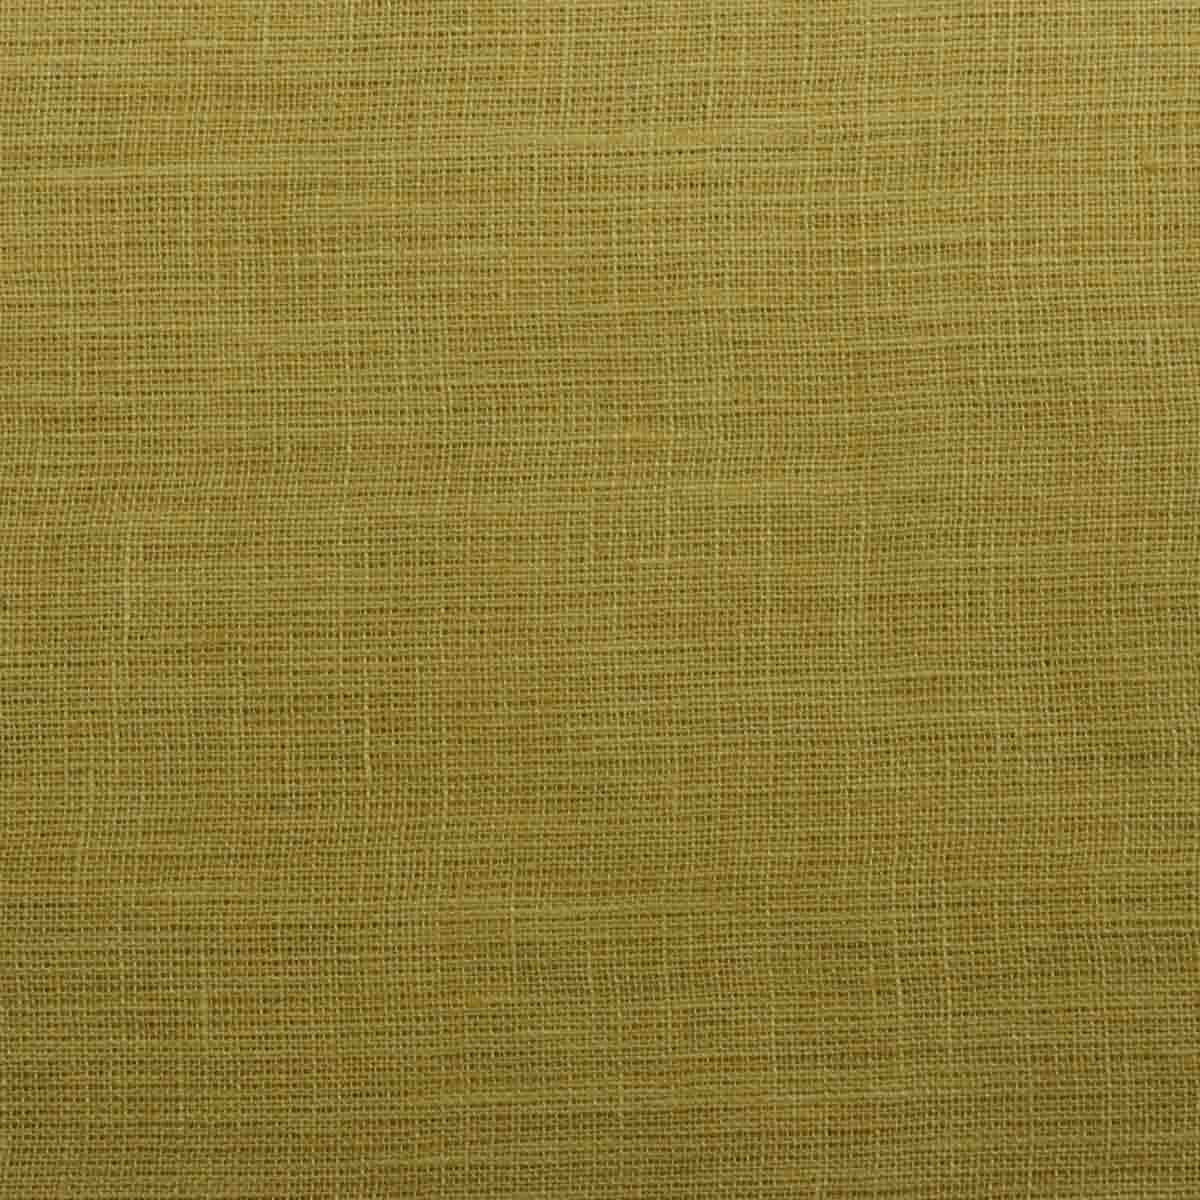 Pure Linen Cotton Golden Yellow (2)